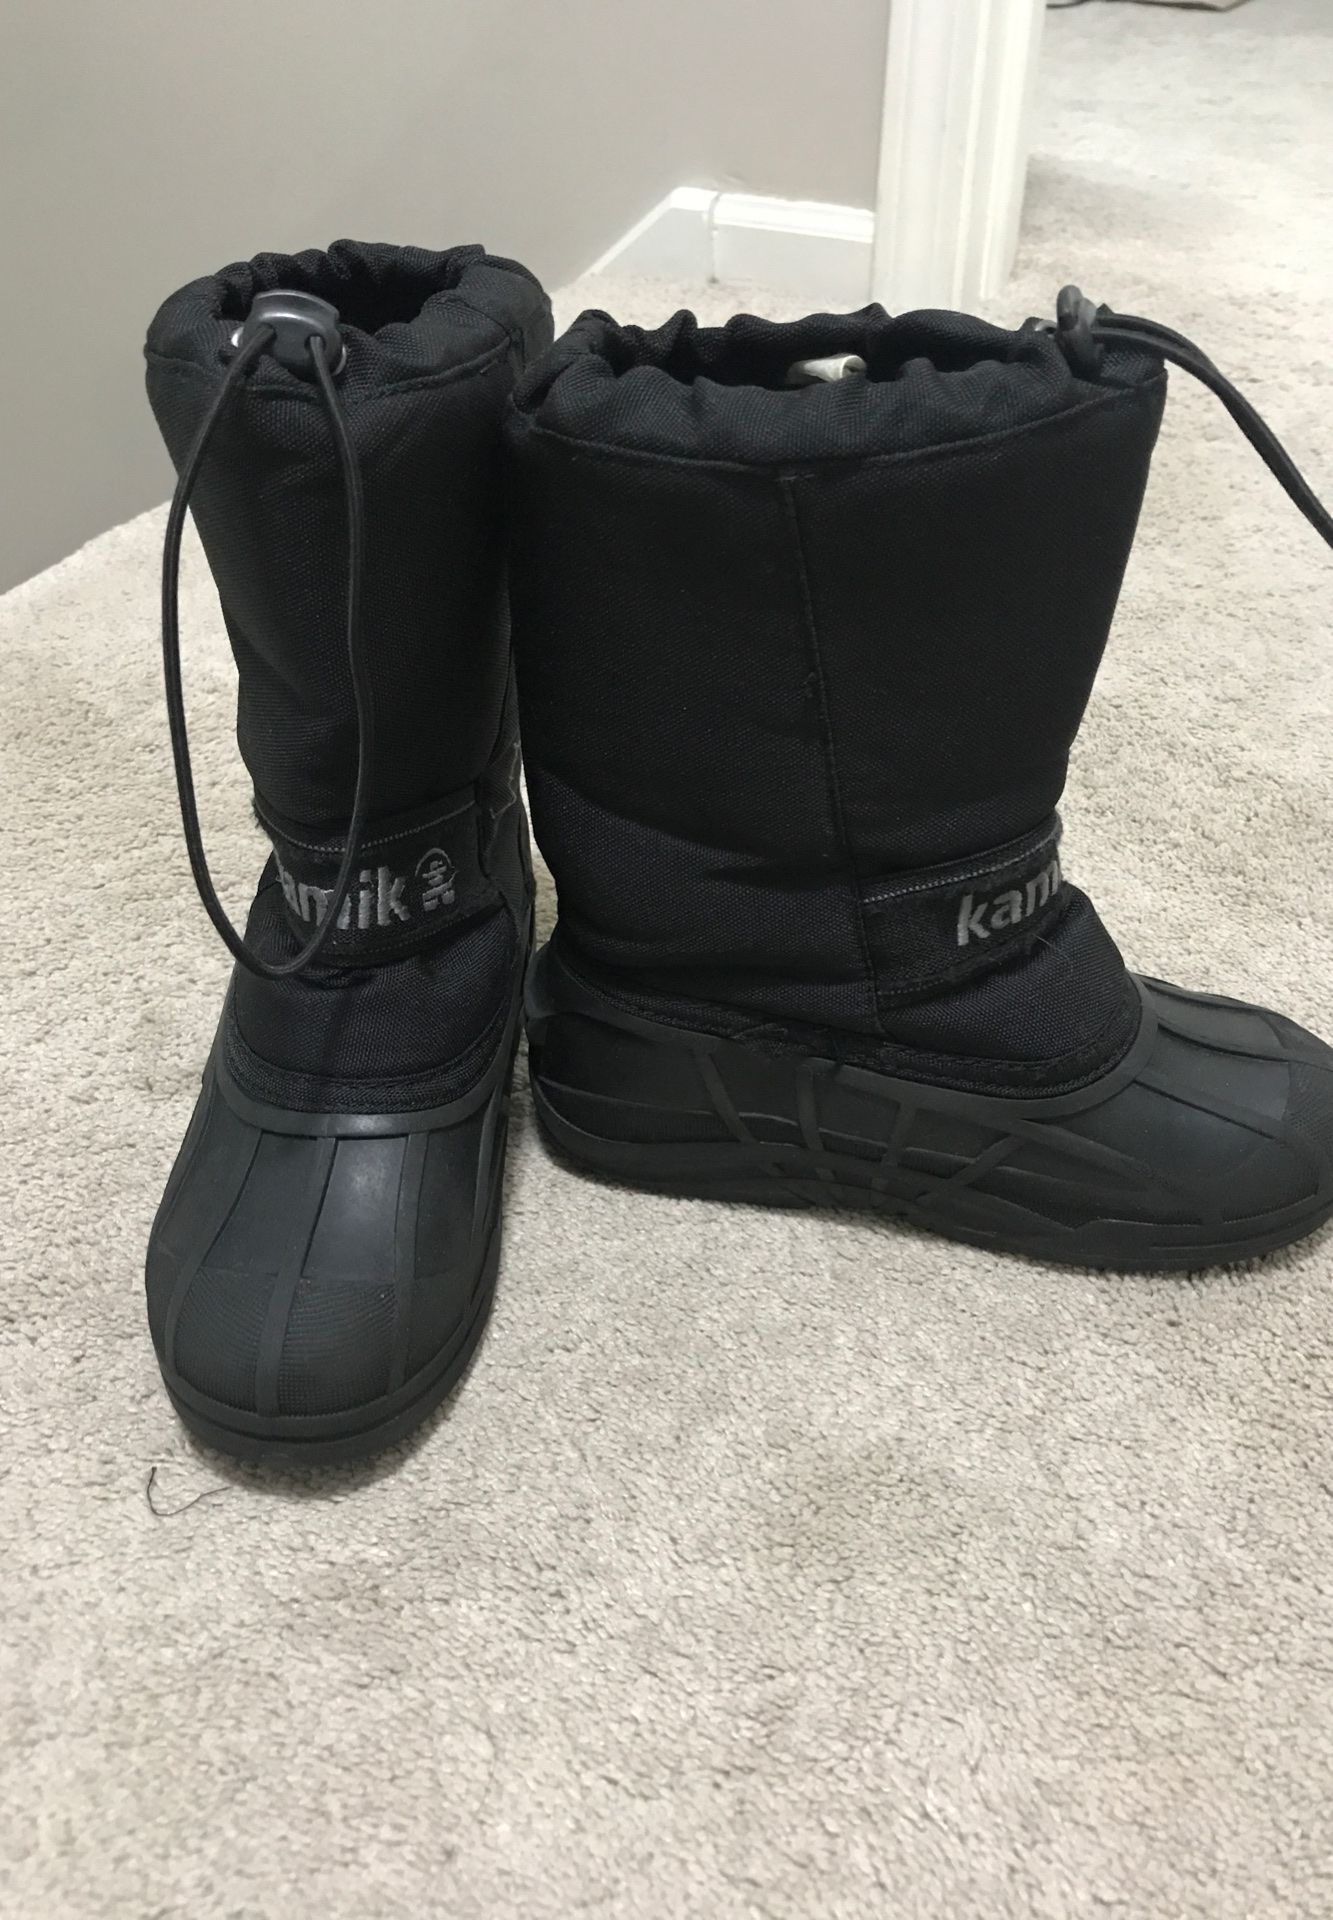 Kids Black size 2 Kamik snow boots